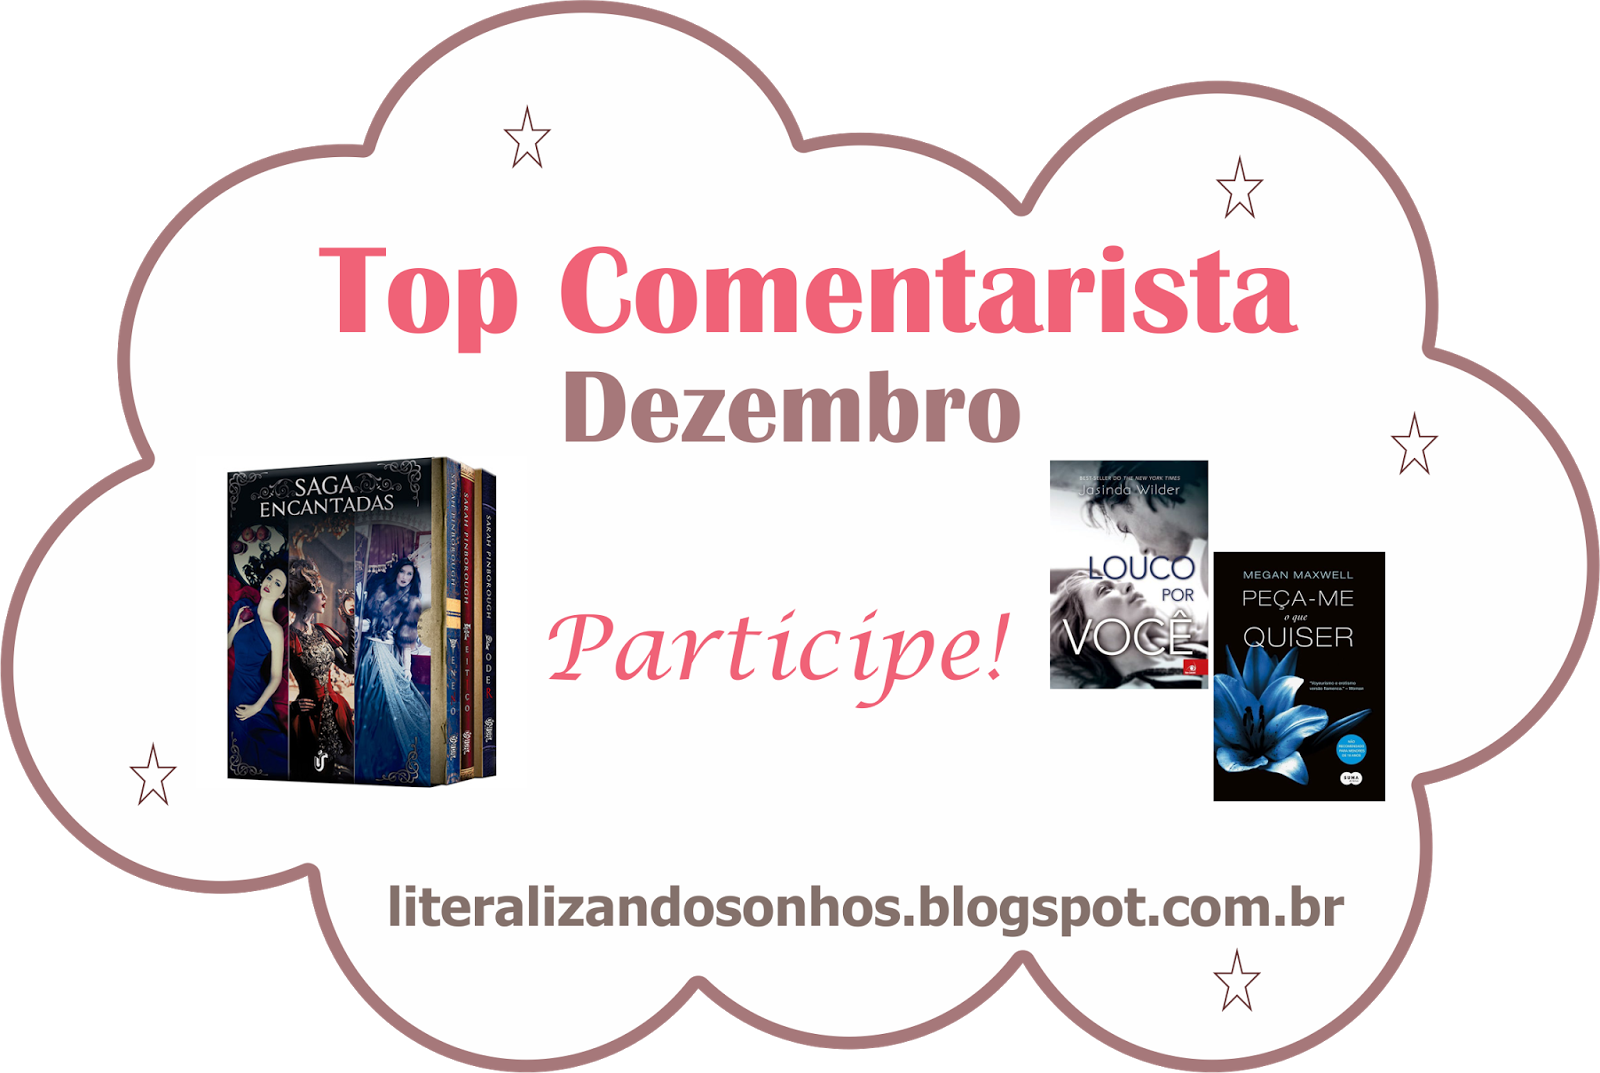 http://literalizandosonhos.blogspot.com.br/2014/12/top-comentarista-2-dezembro.html